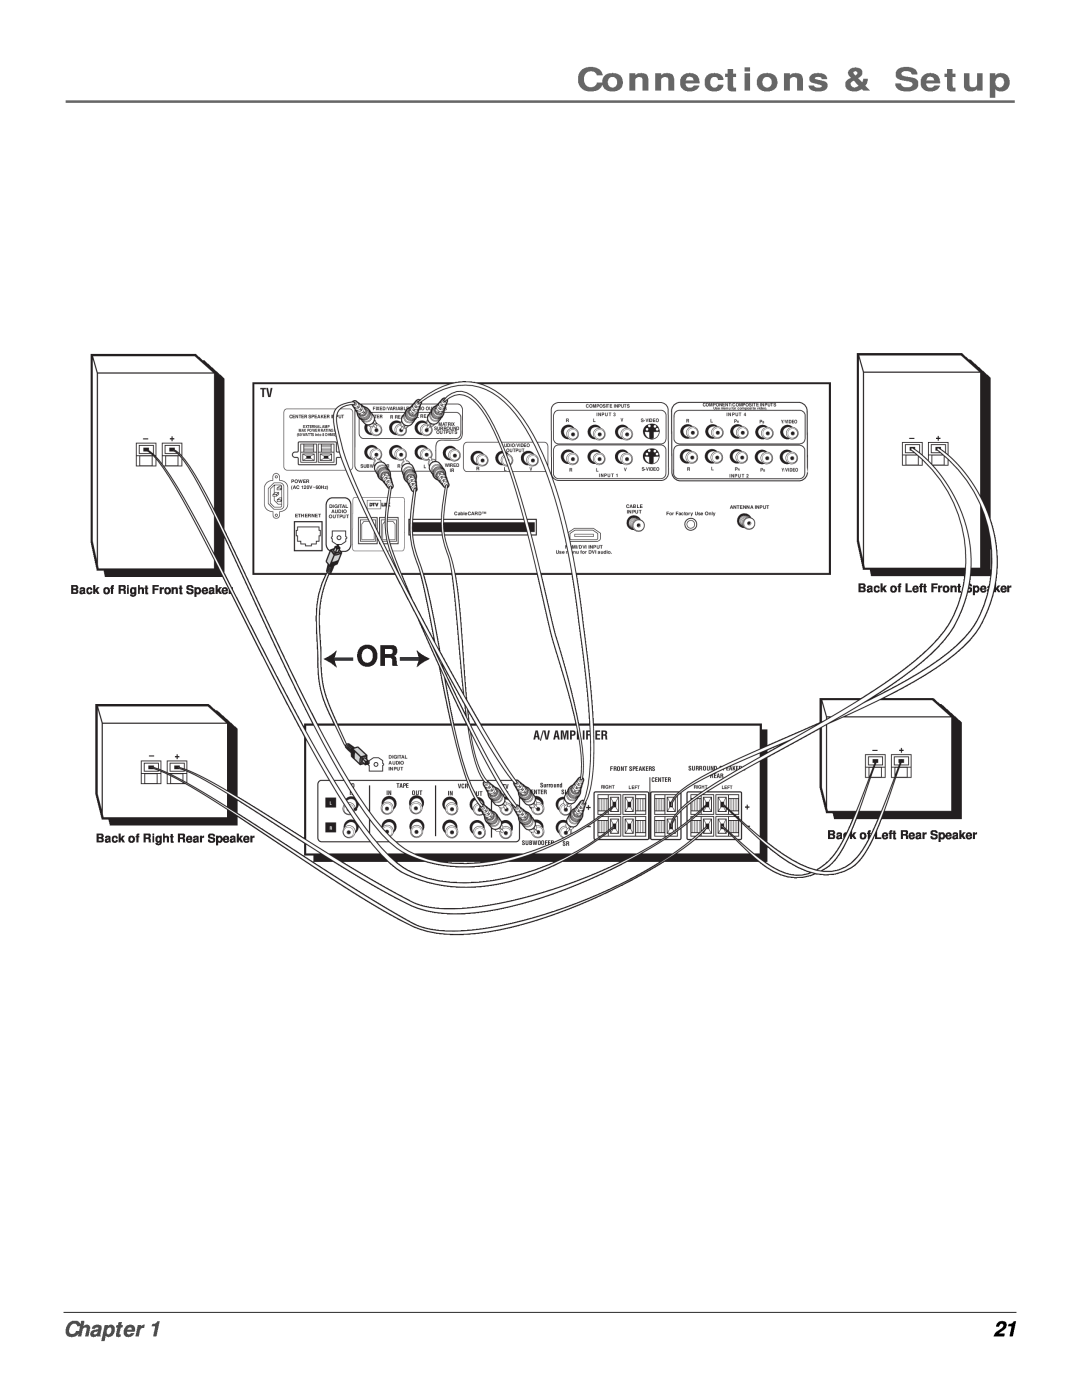 RCA scenium manual Connections & Setup, Chapter, Back of Right Front Speaker, Back of Left Front Speaker, A/V Amplifier 